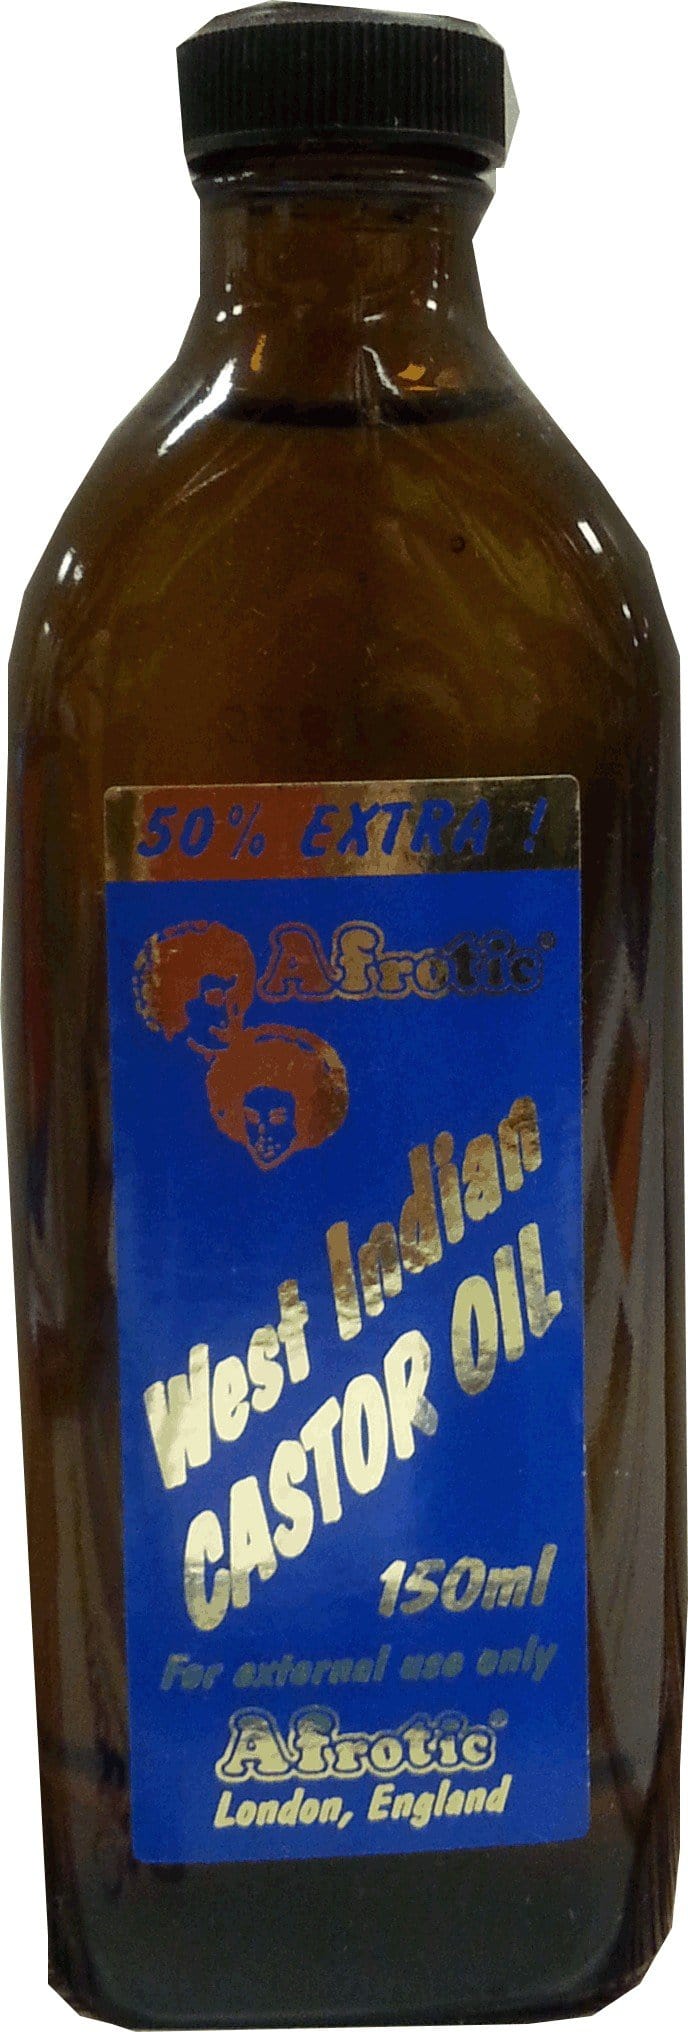 West Indian Castor Oil 150 ml